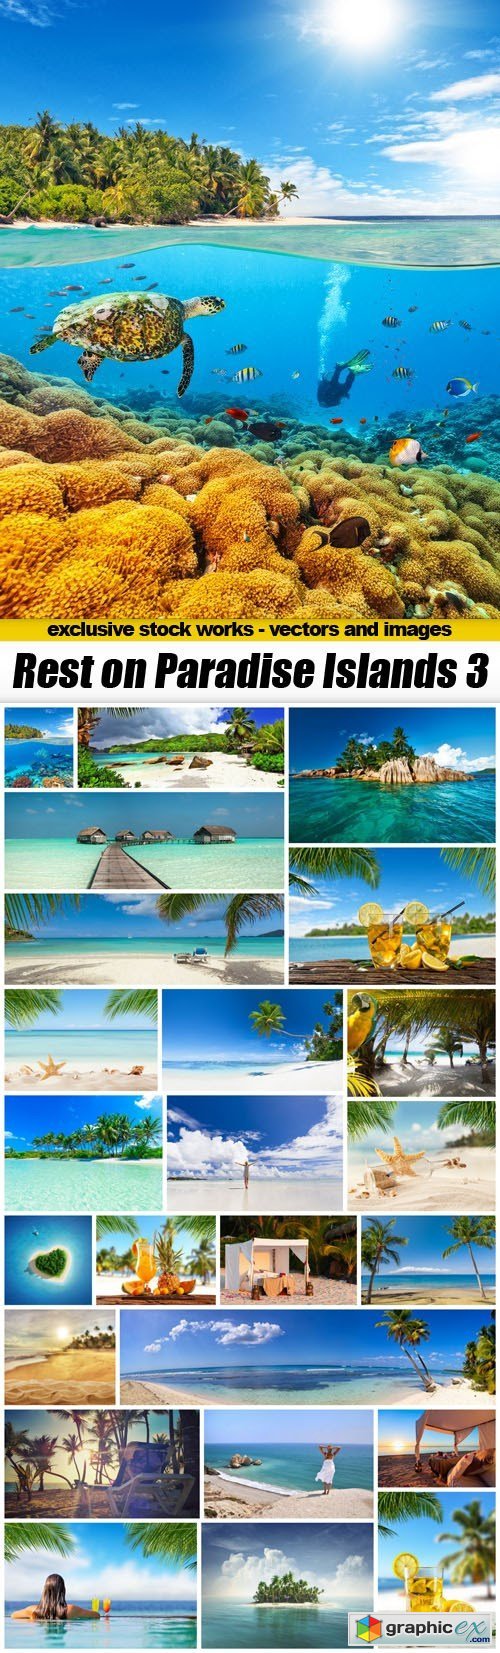 Rest on Paradise Islands 3 - 25xUHQ JPEG